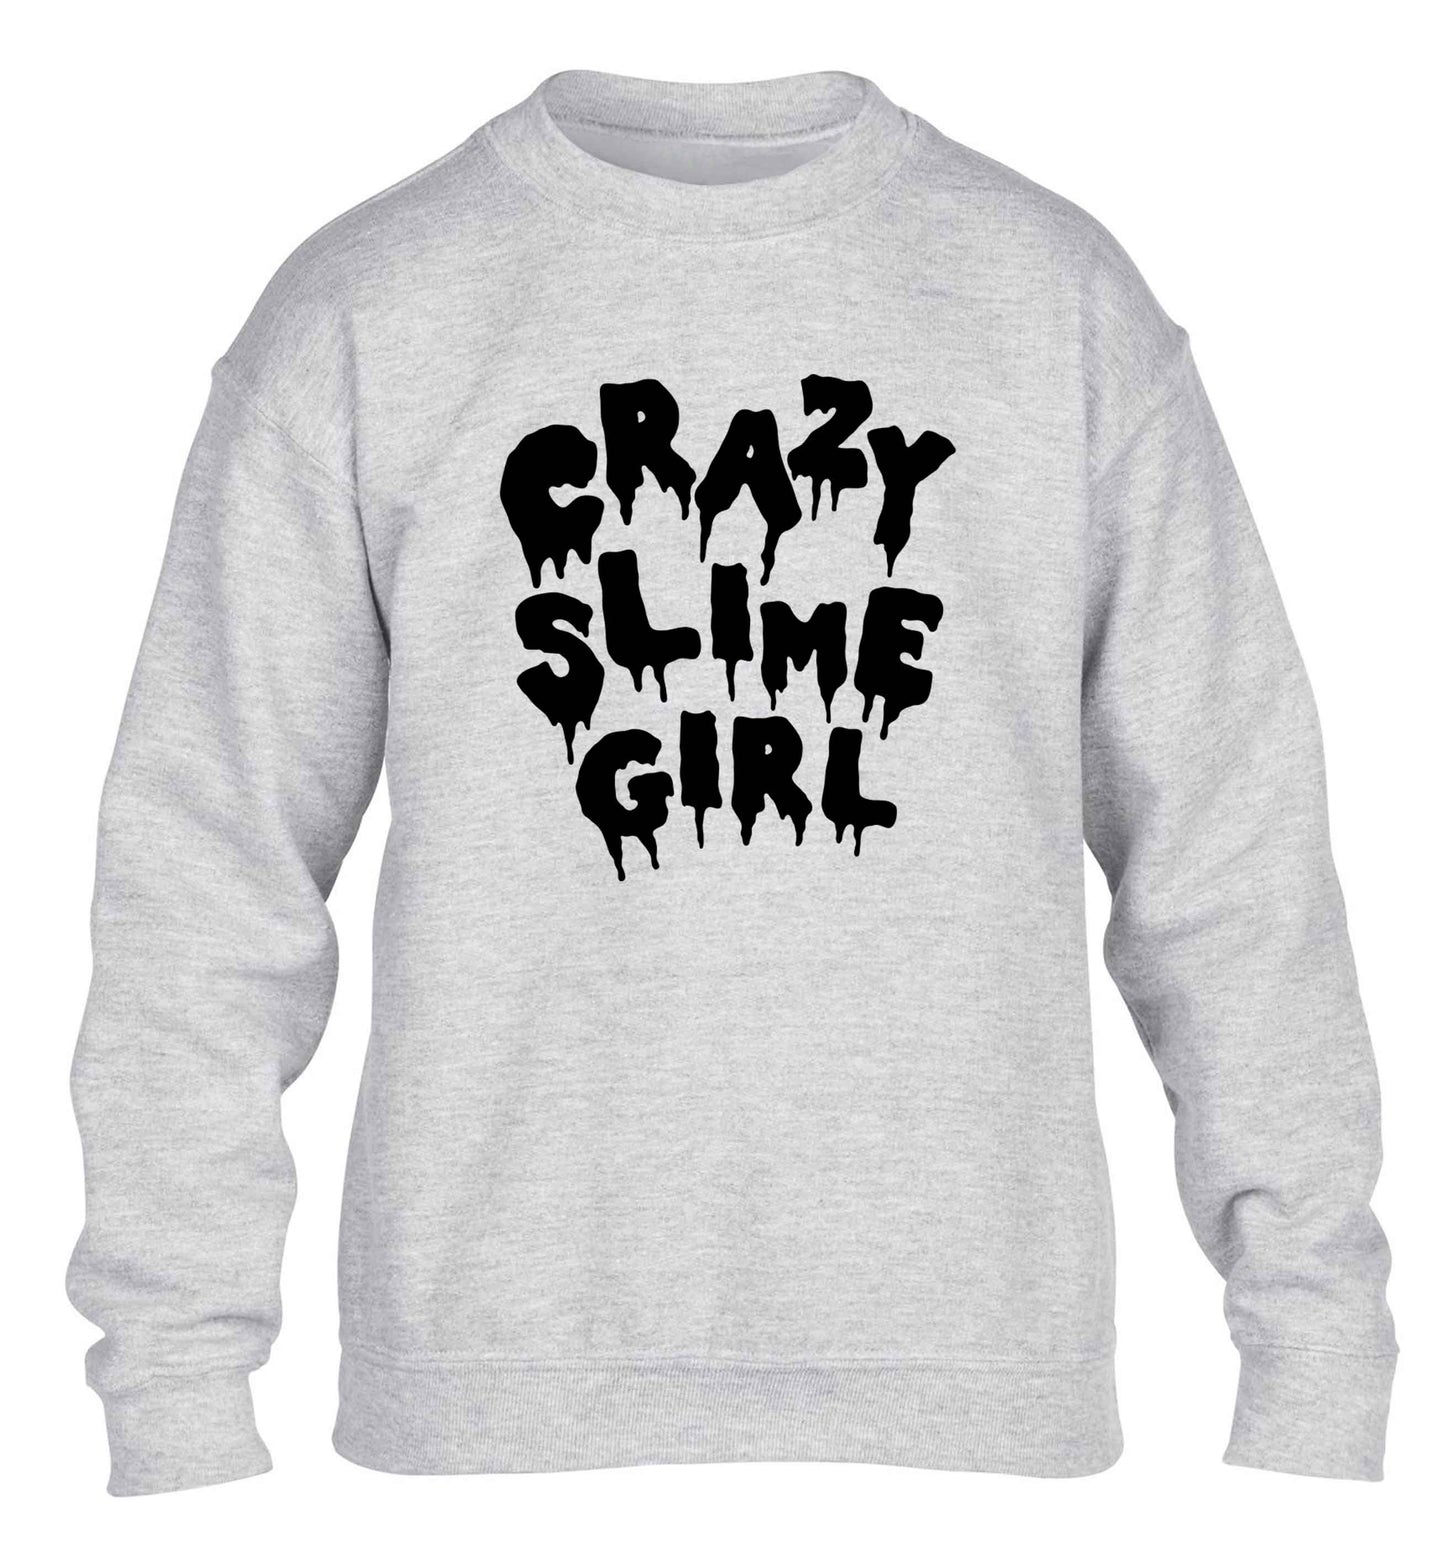 Crazy slime girl children's grey sweater 12-13 Years